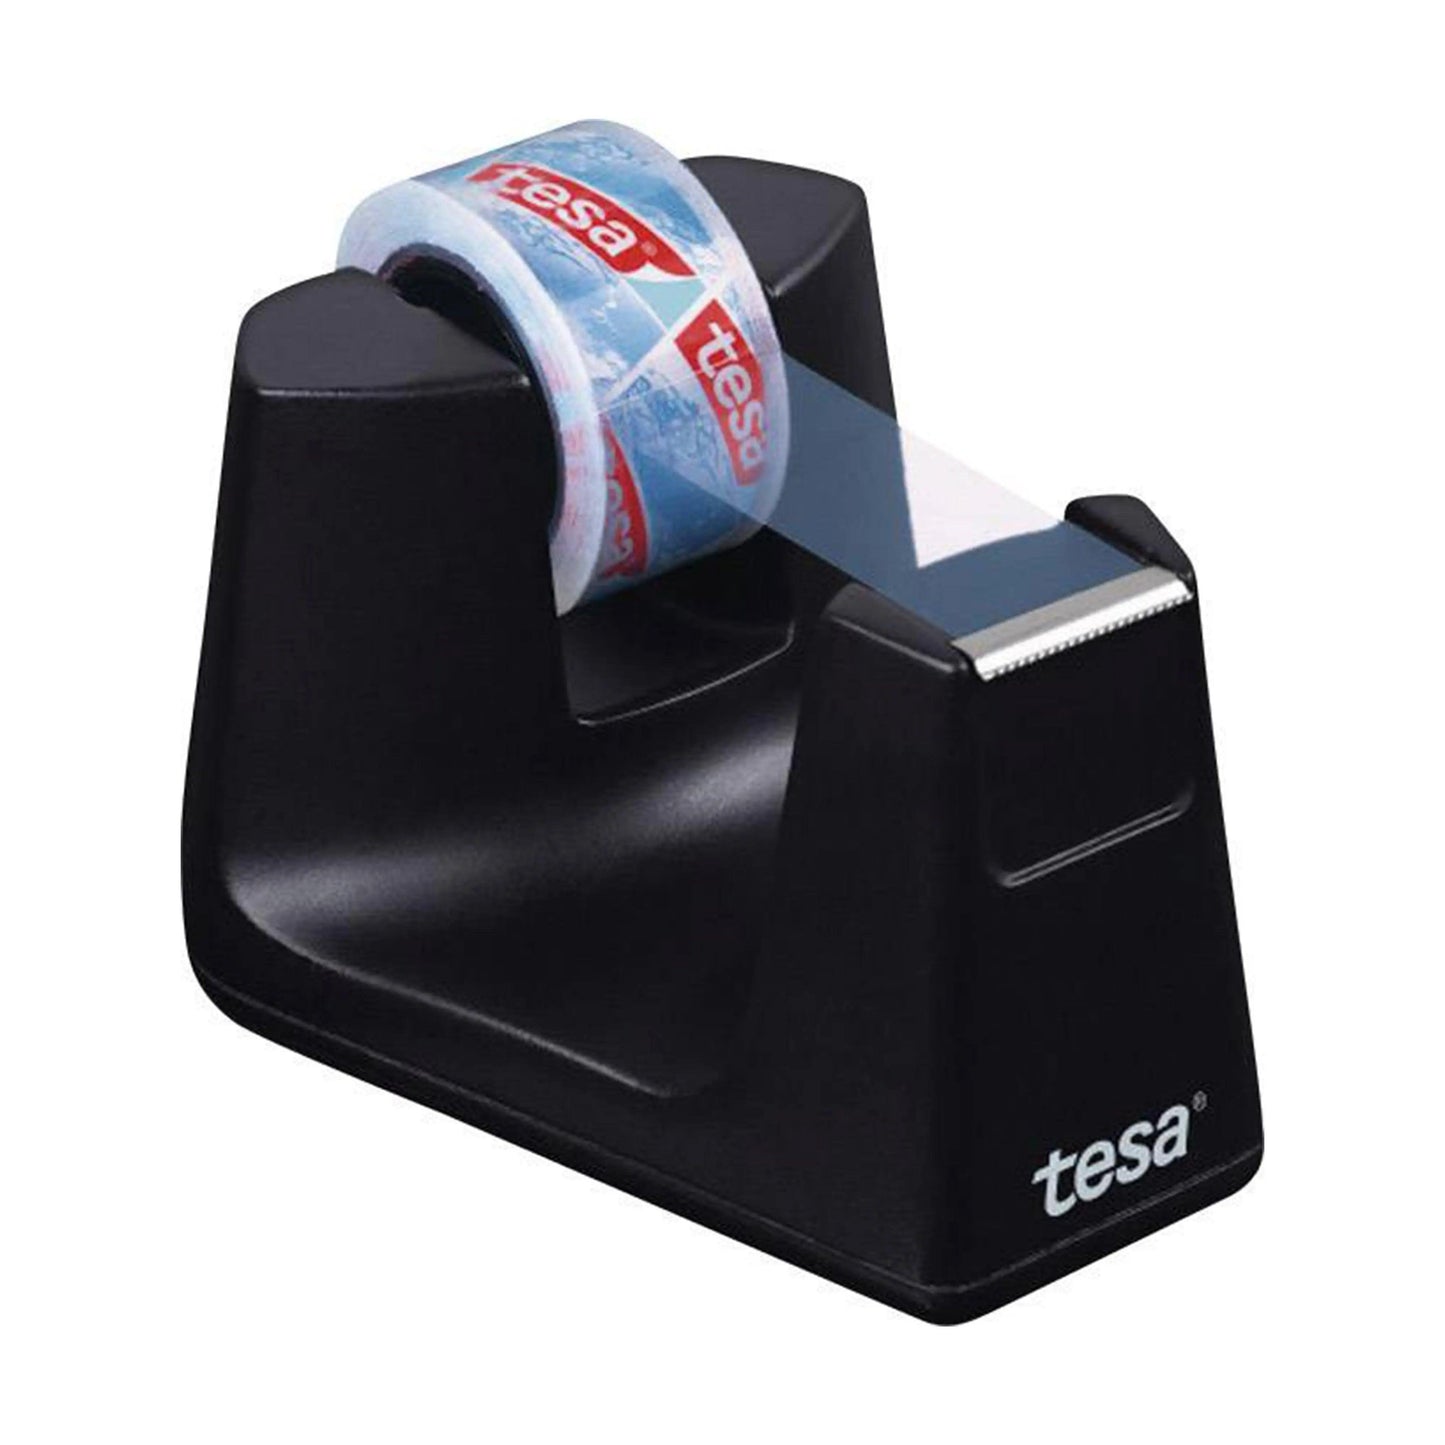 Tesa Smart Desk Tape Dispenser The Stationers